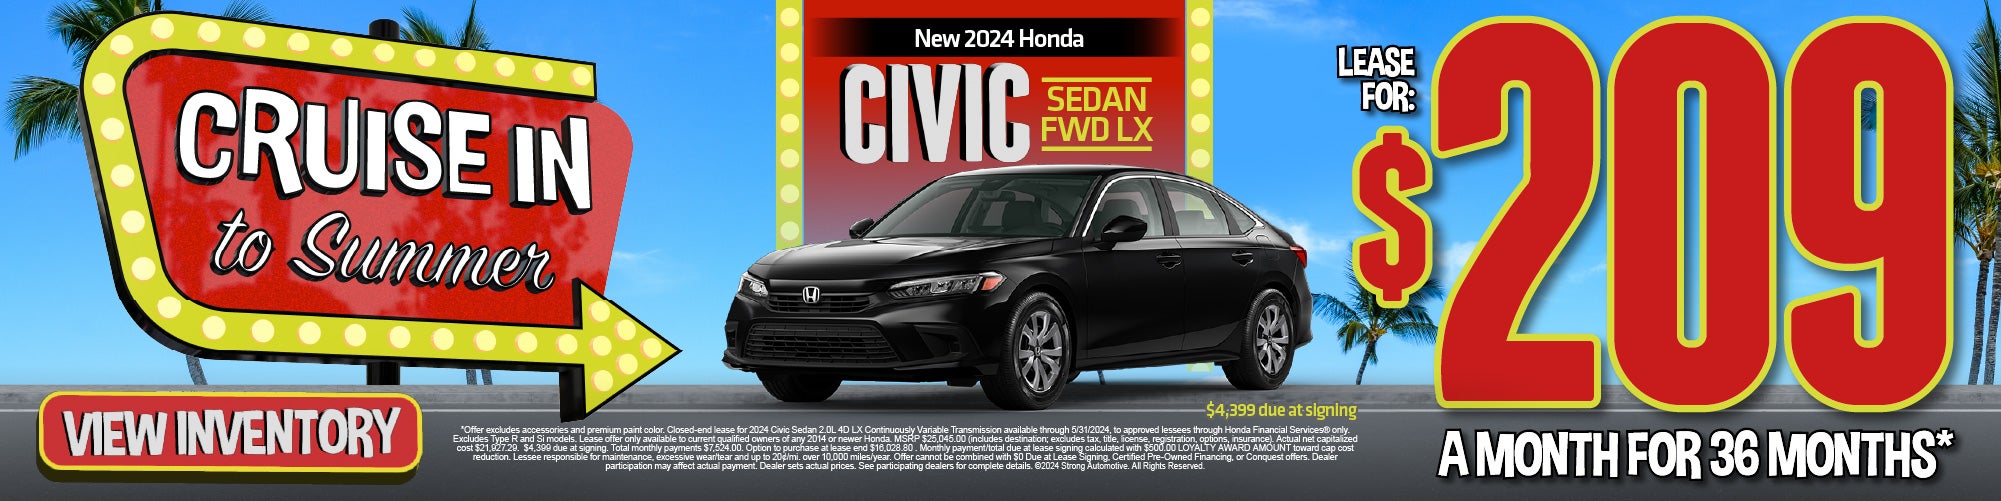 2024 Honda Civic Sedan FWD LX - $209 a month for 36 months* 